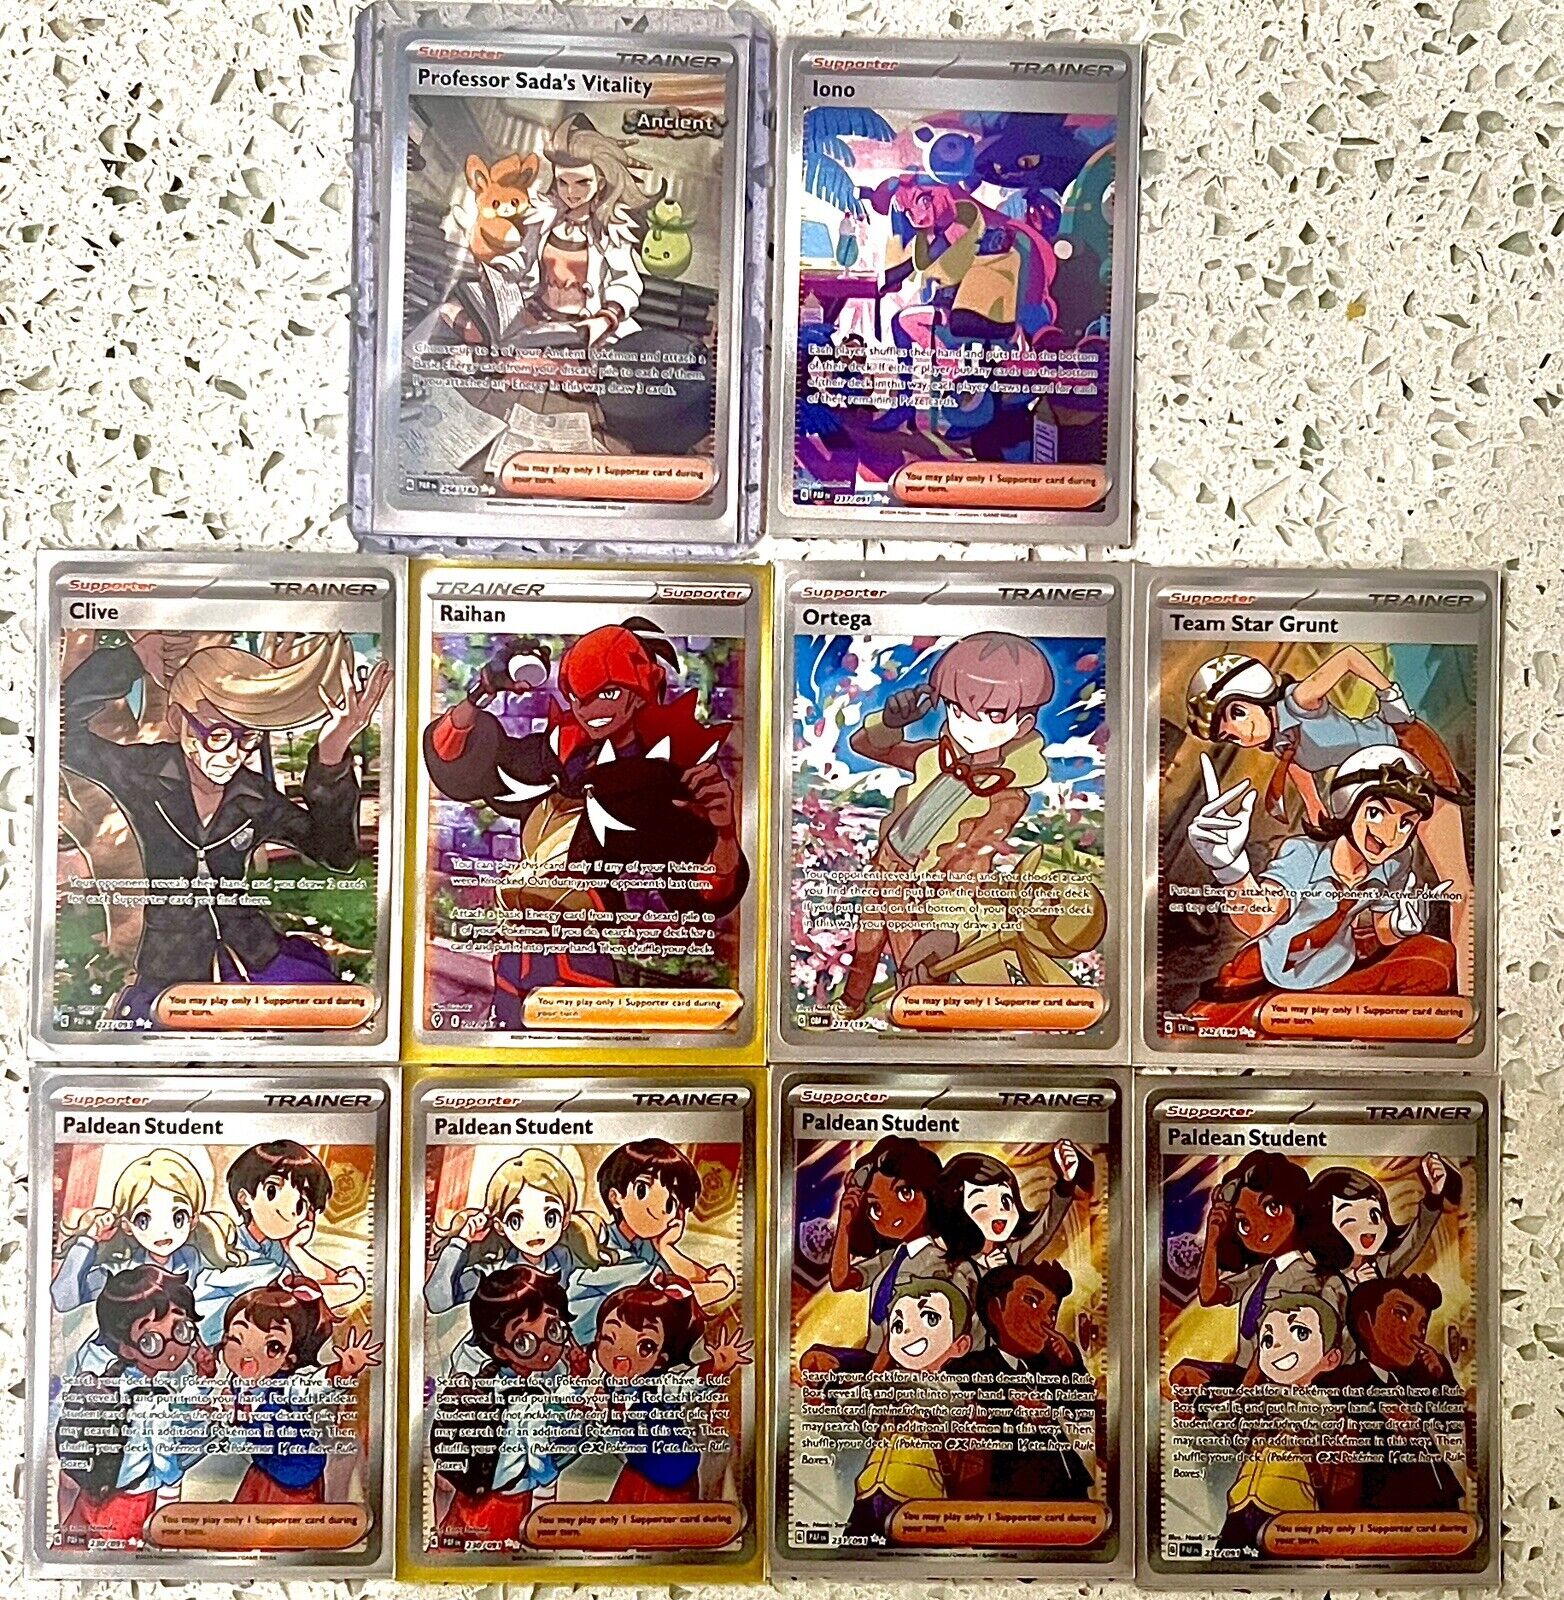 Pokémon TCG: TRAINER LOT 10x Cards - Professor Sada’s Vitality + Iono NM/M Rare